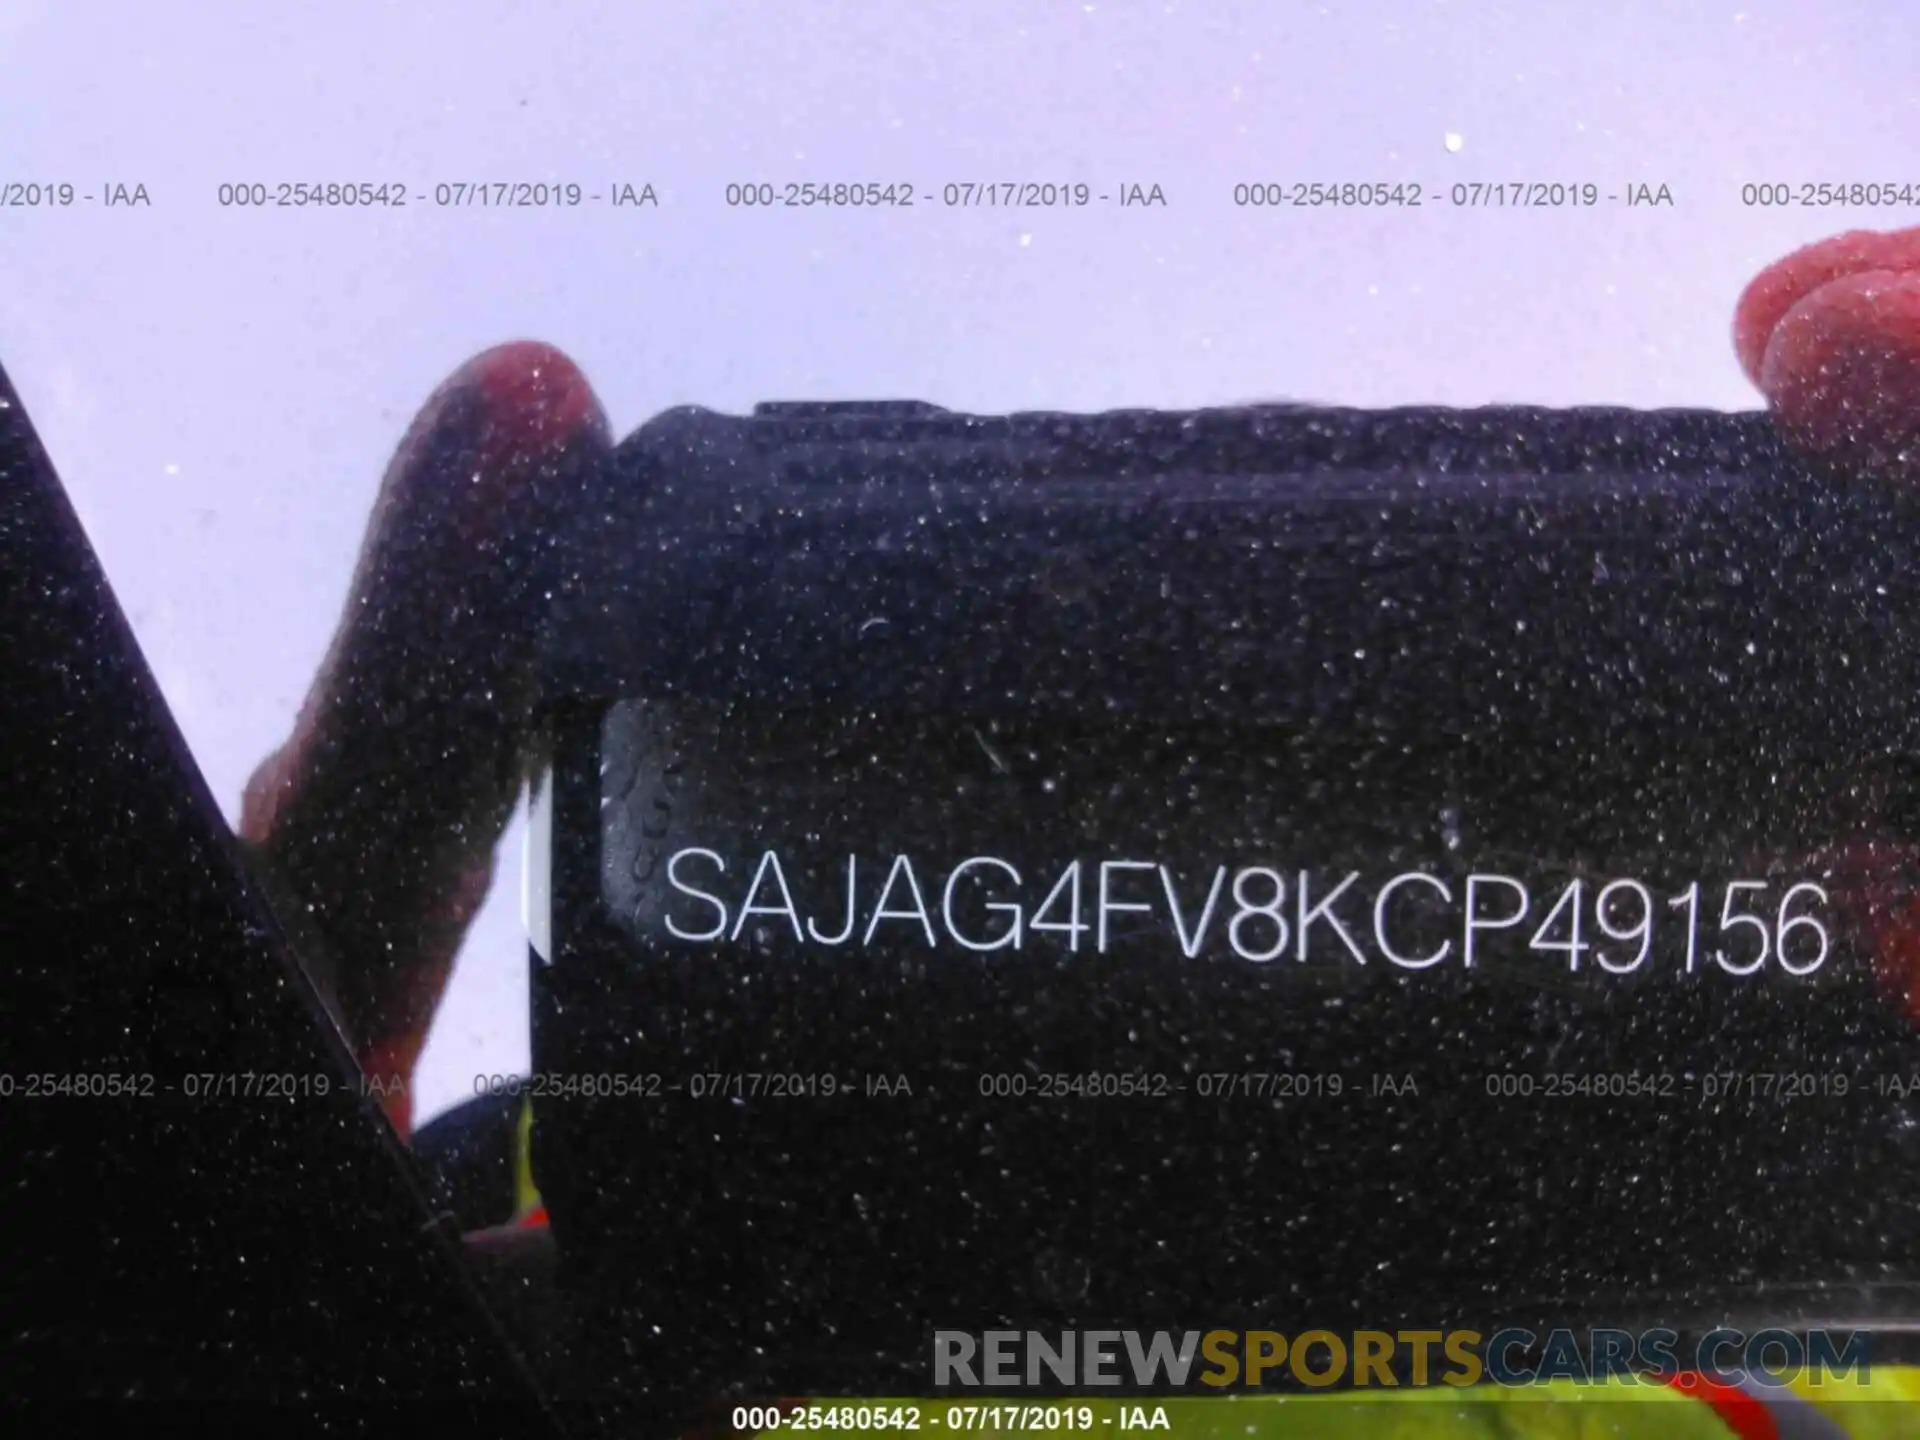 9 Photograph of a damaged car SAJAG4FV8KCP49156 JAGUAR XE 2019